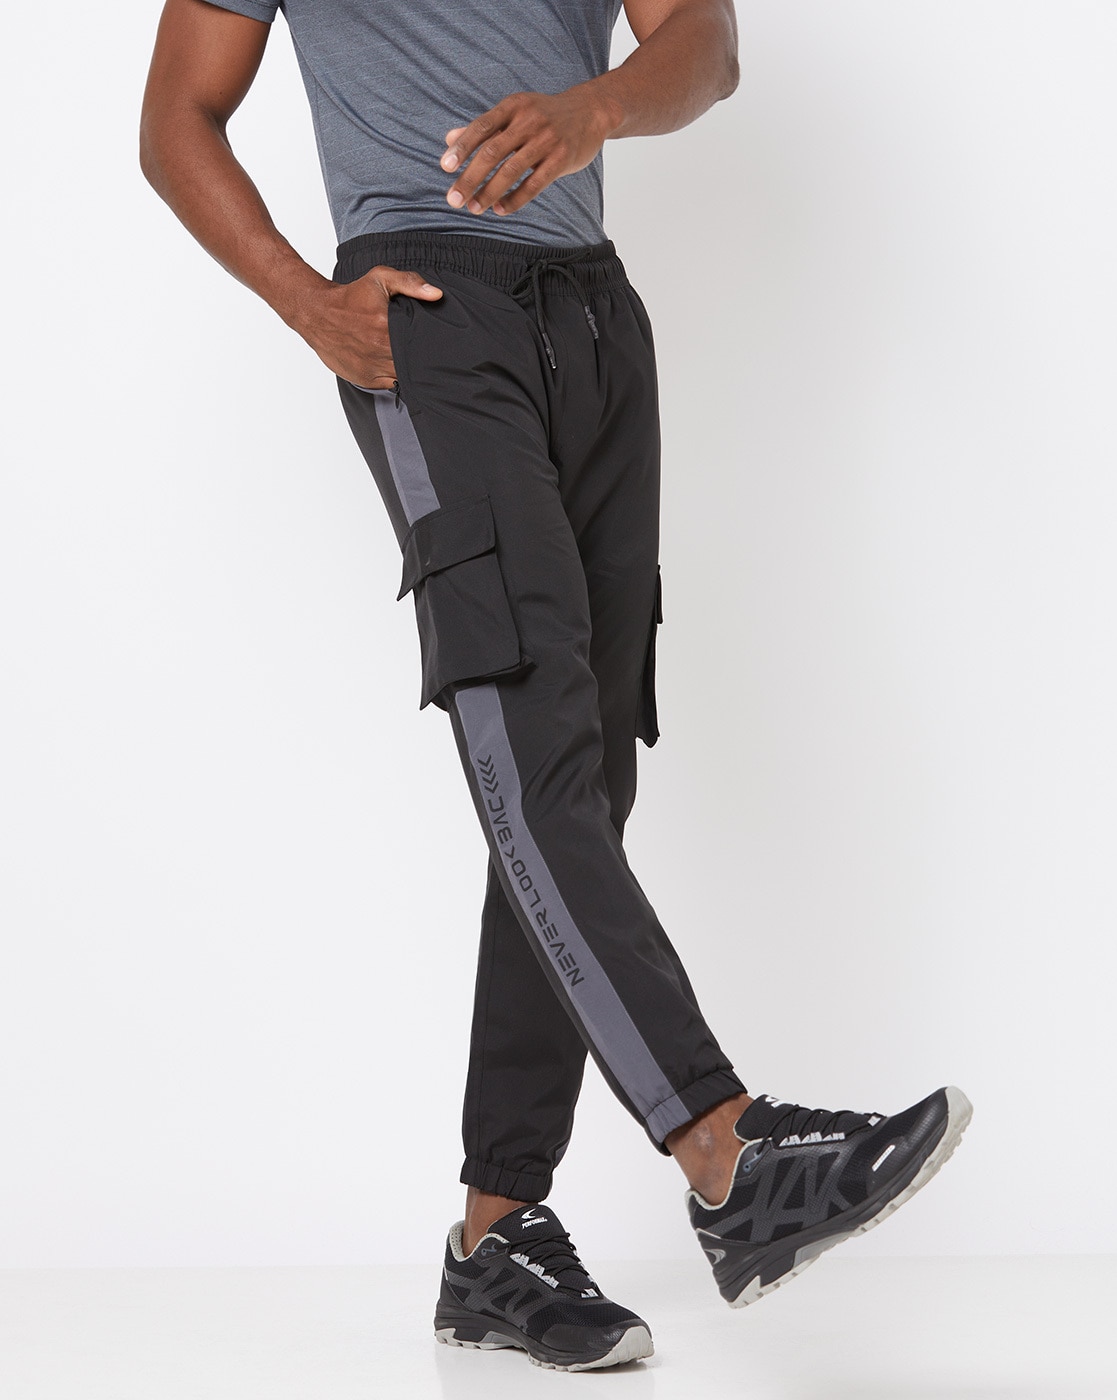 Laixton Men's Techwear Jogger Pants Fashion Hip Hop Casual Outdoor Cargo  Pants Baggy Streetwear Tactical Track Pants Black at Amazon Men's Clothing  store